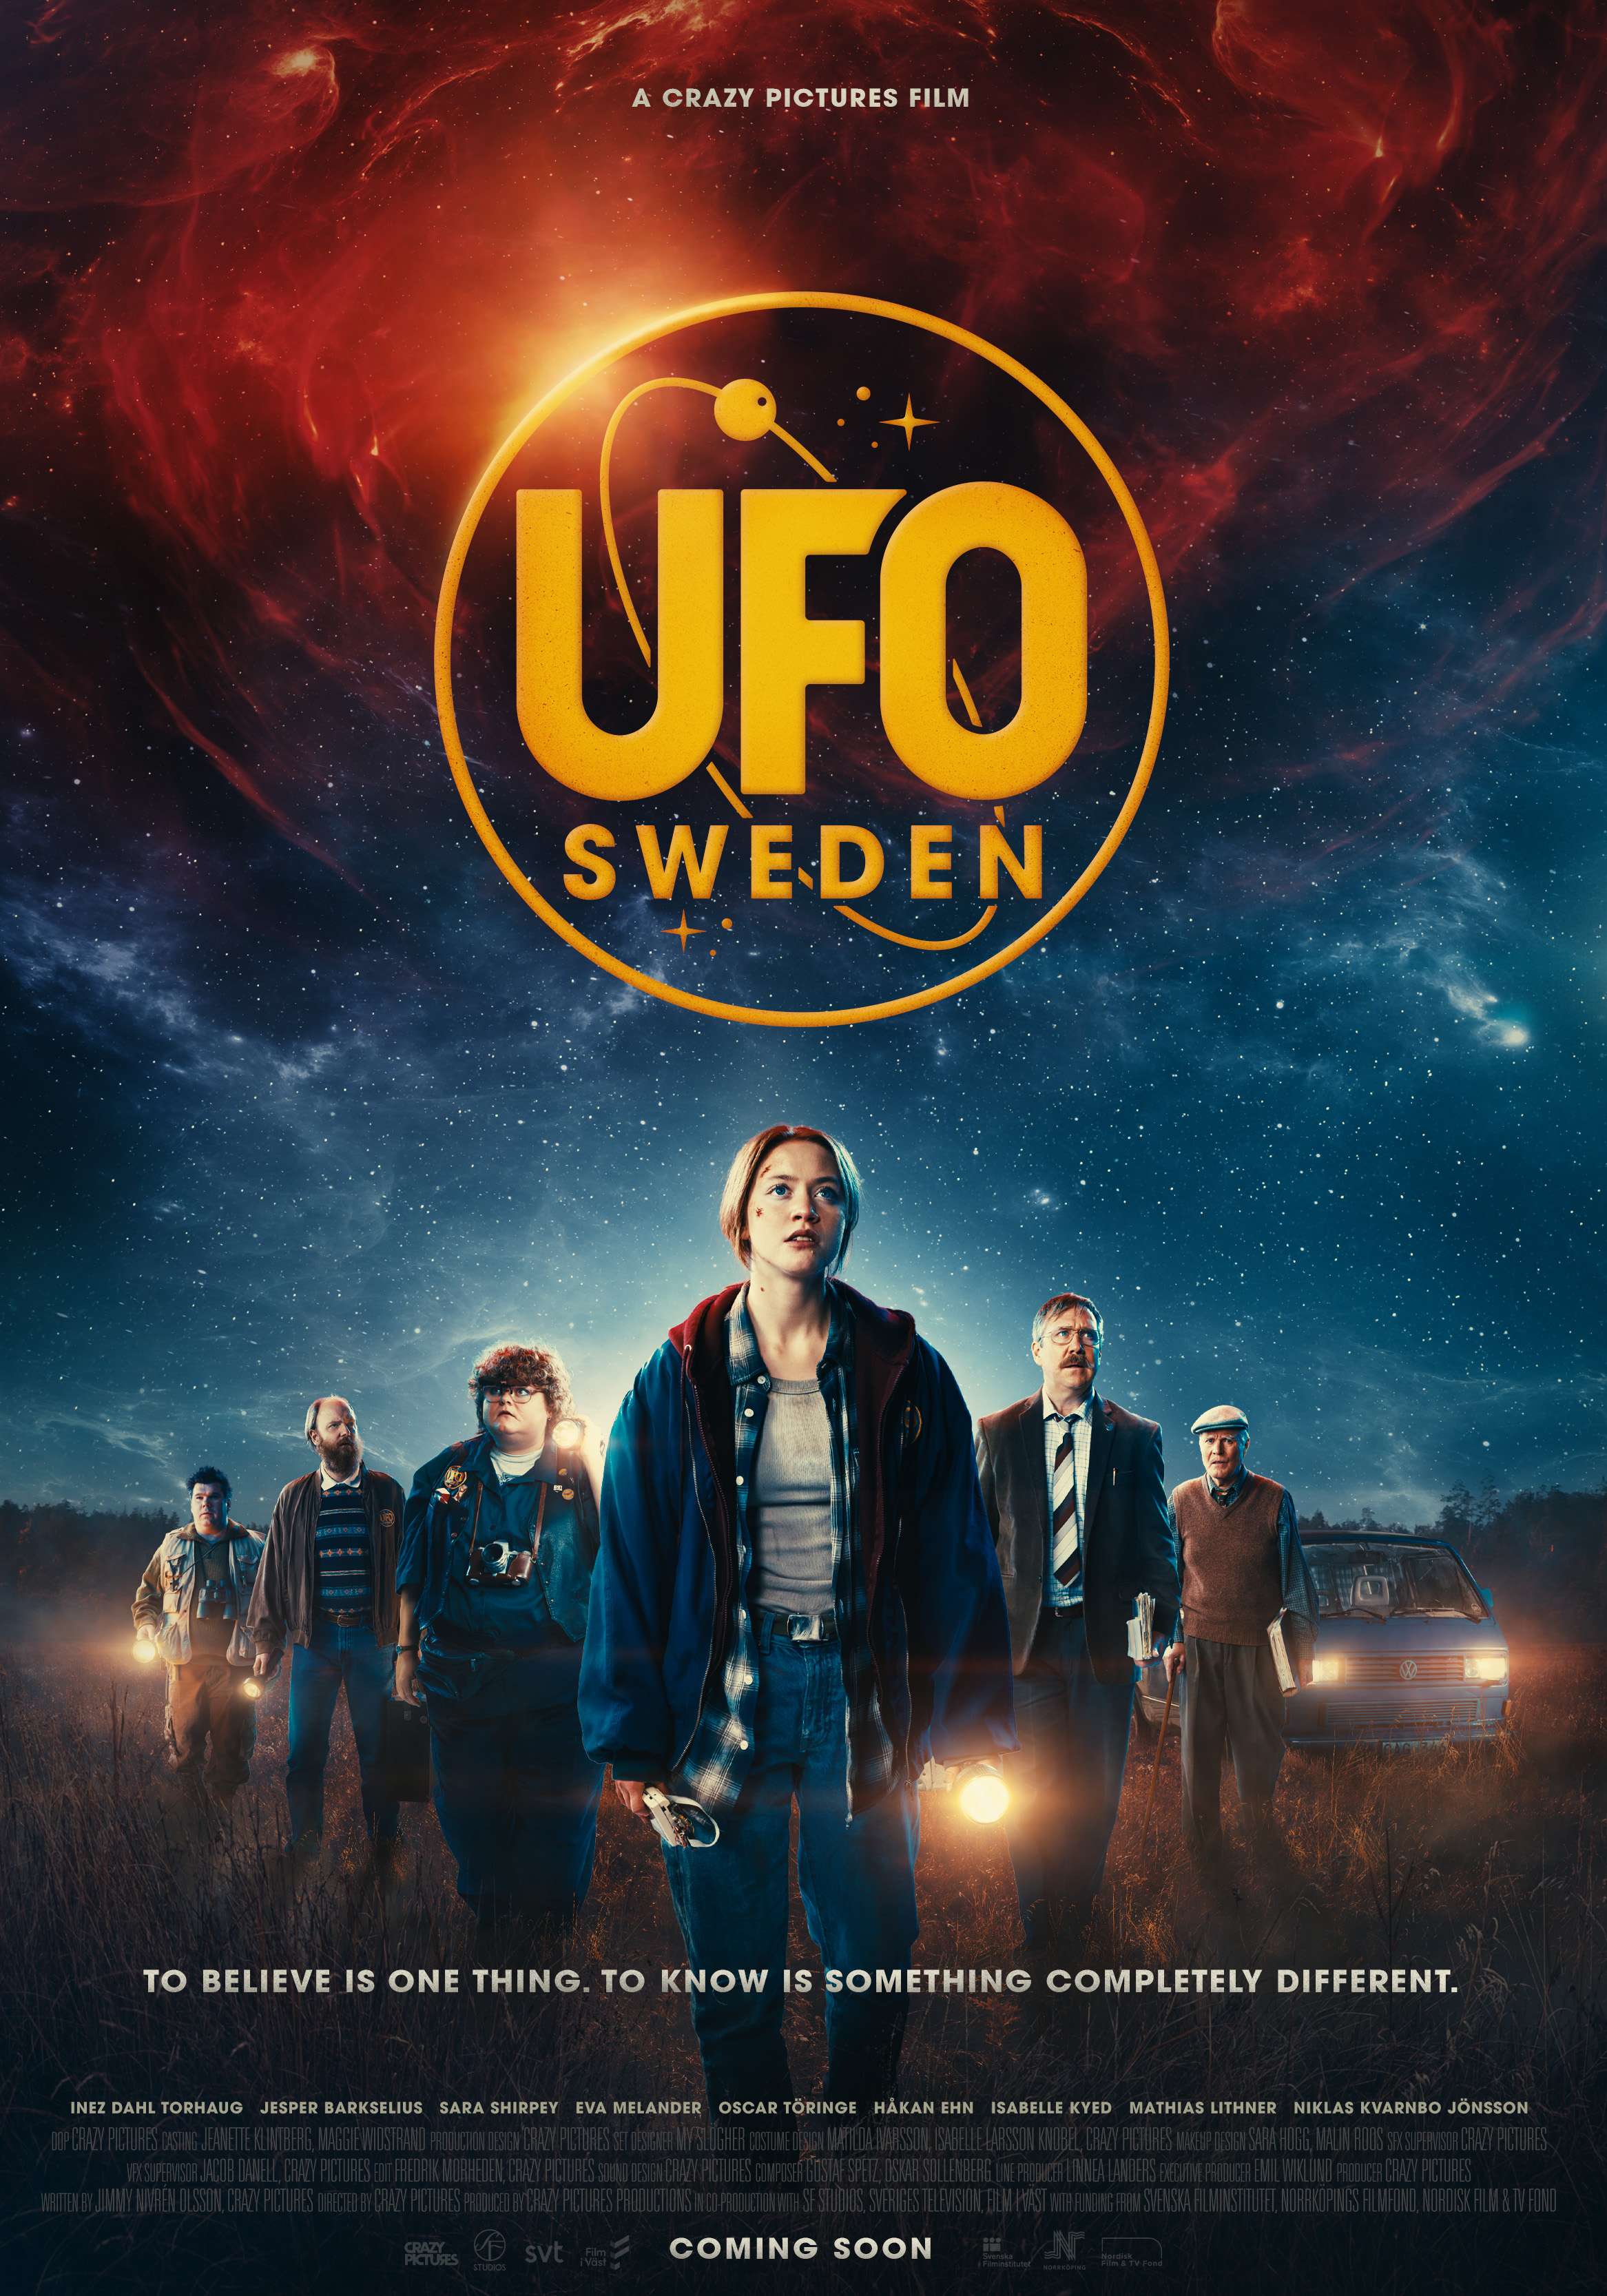 UFO Sweden 2022 FULL HD 1080p x264 E AC3 AC3 ITA DTS AC3 SWE